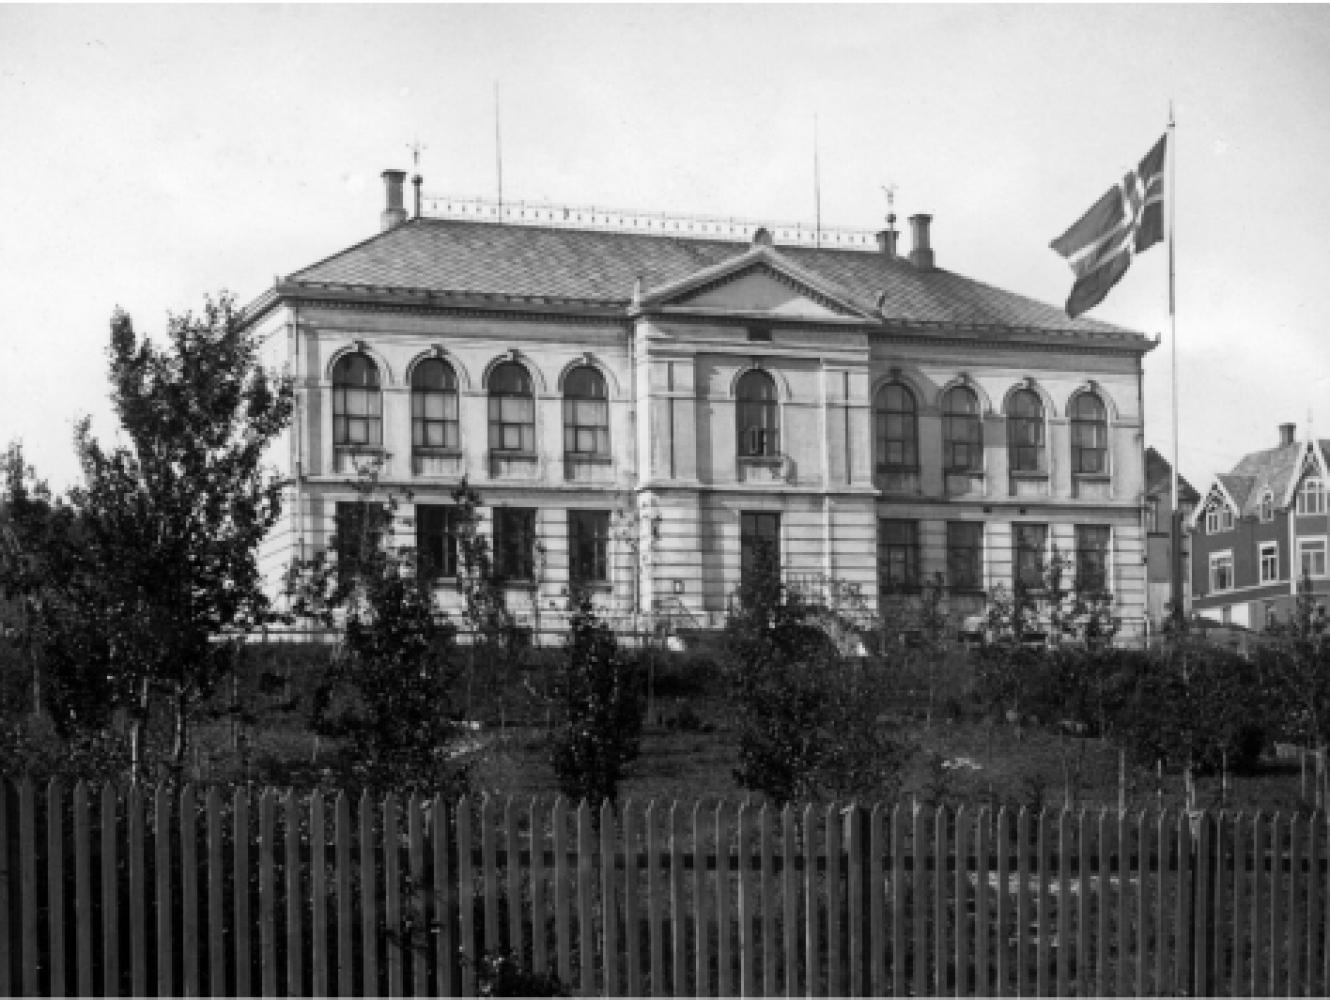 Museumsbygning i Muségata fra 1894